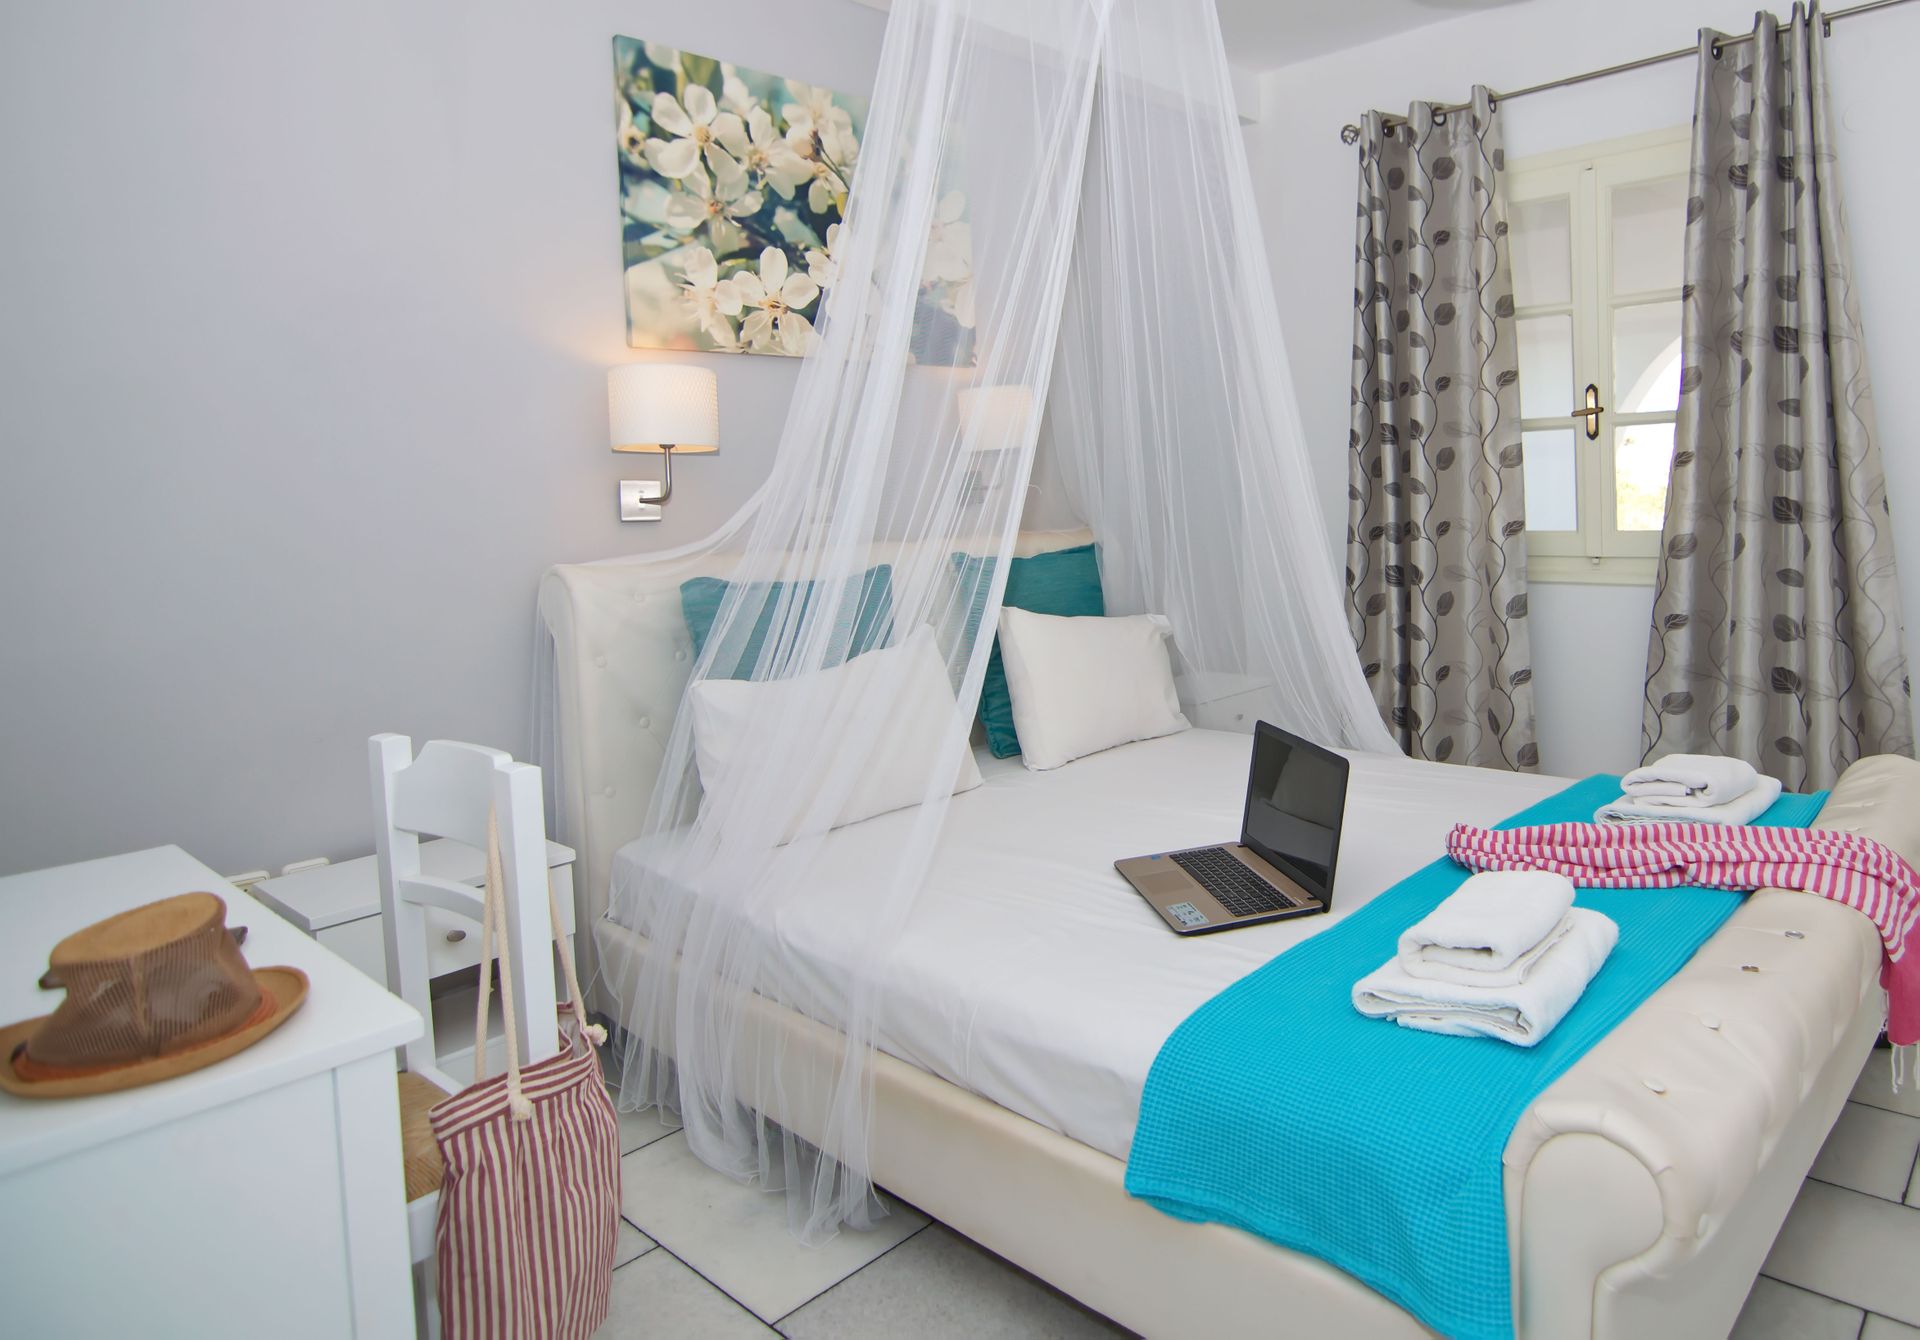 Camara Hotel – Άγιος Προκόπιος, Νάξος Νάξος -20% για 2 ημέρες/ 1 νύχτα με πρωινό για 2 άτομα